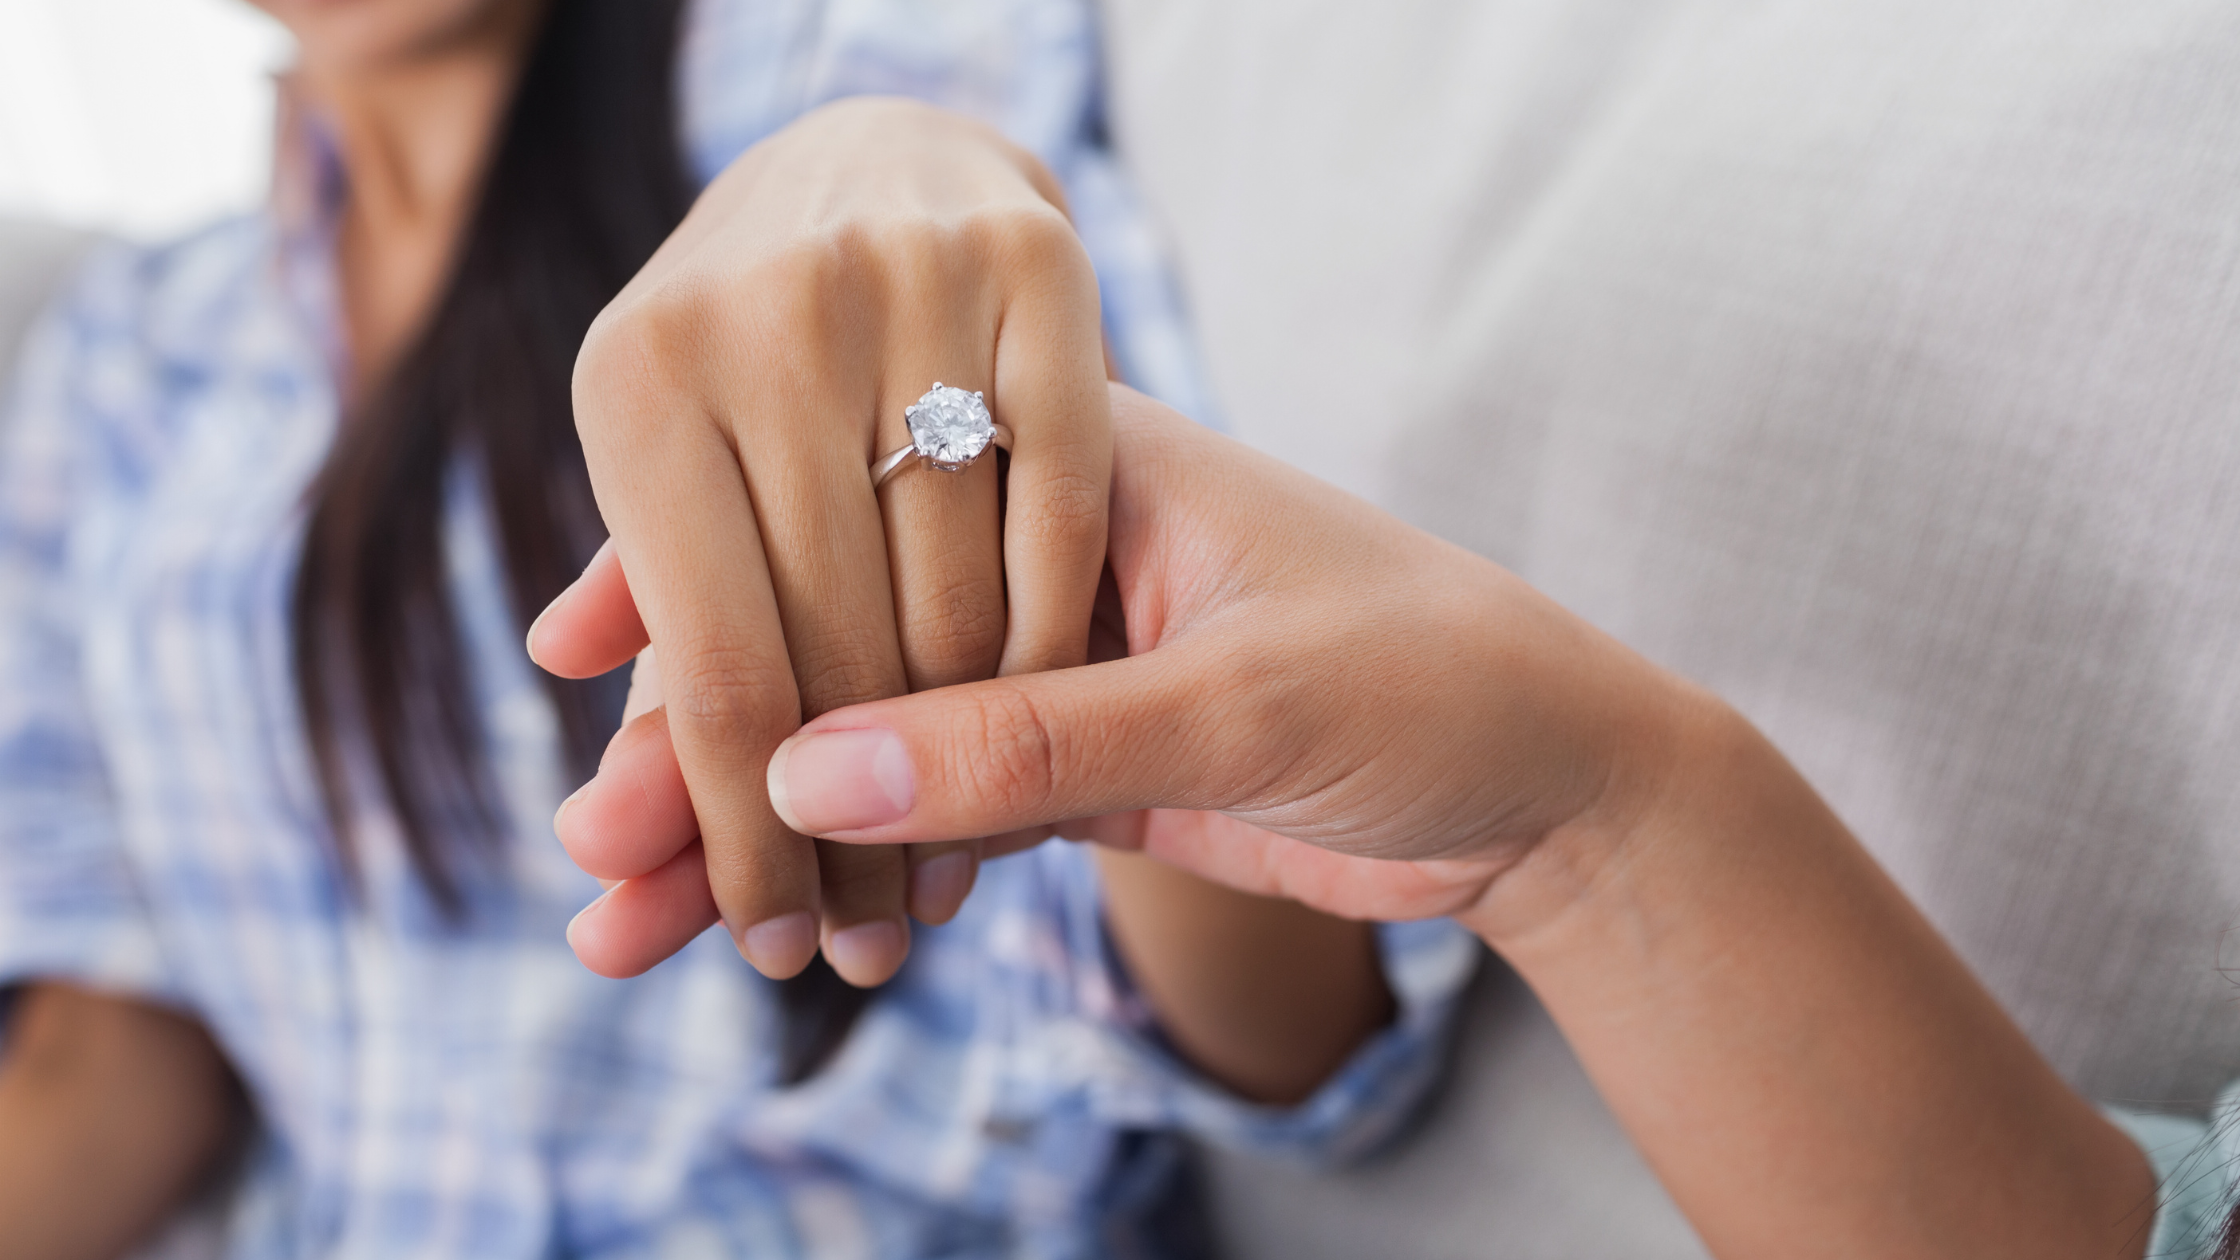 How to Fix Wedding Ring Rash